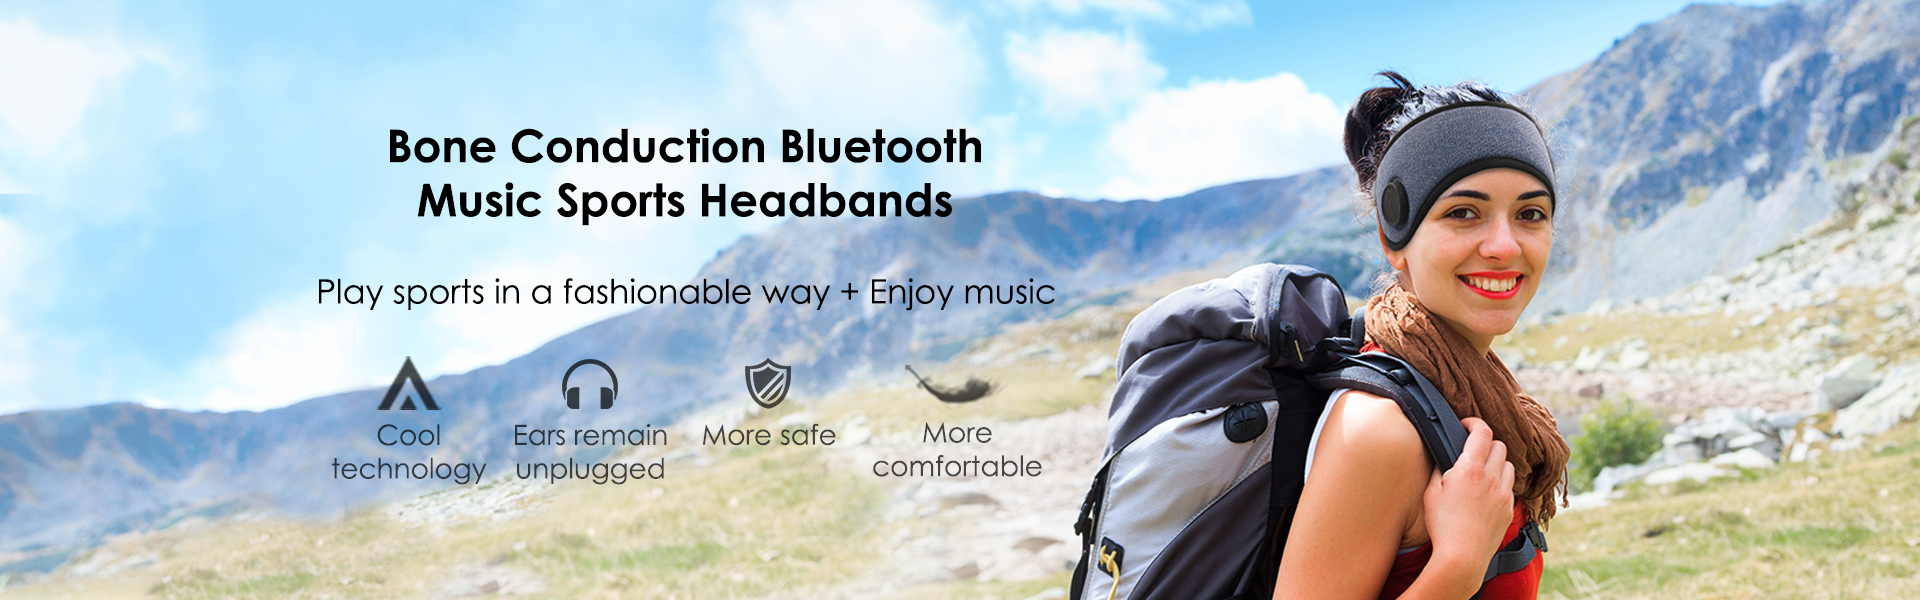 Comeille Bone Conduction Bluetooth Music Sports Headbands